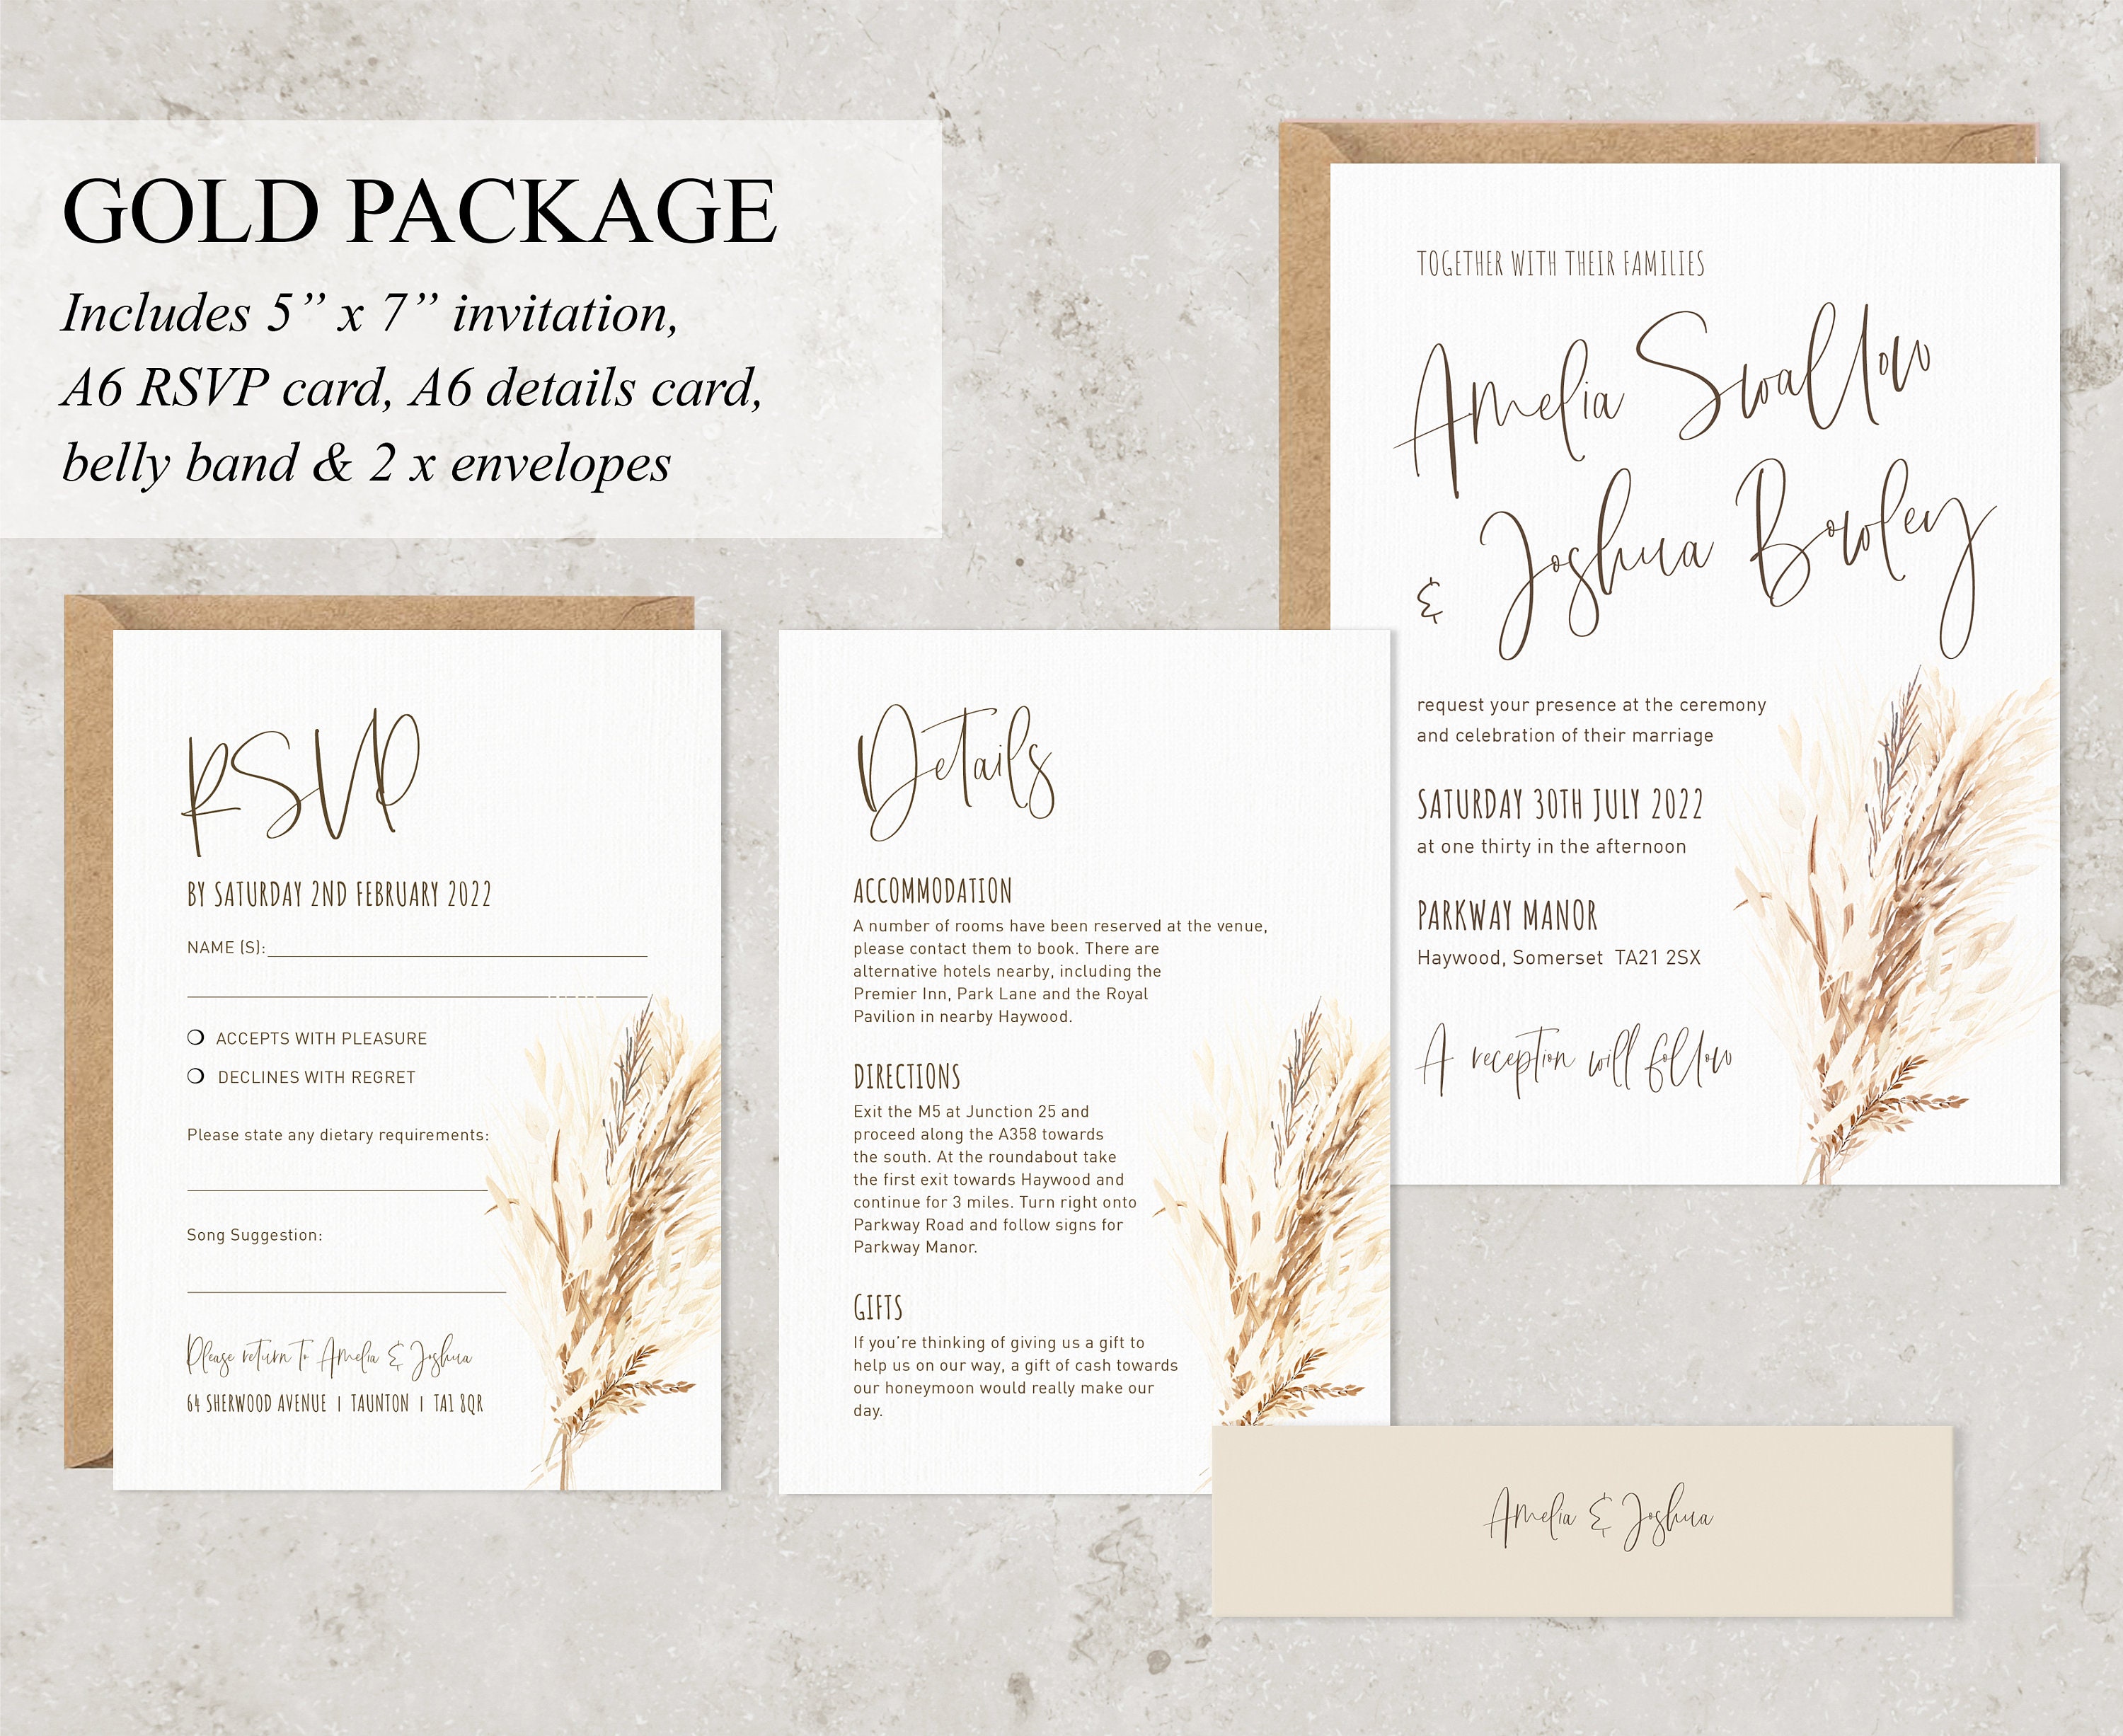 Wedding invitation stationery mockup with a dried grass decoration.  Dimensions: 5x7, 5x3.5, 6x4. Stock Photo by Snoflinga